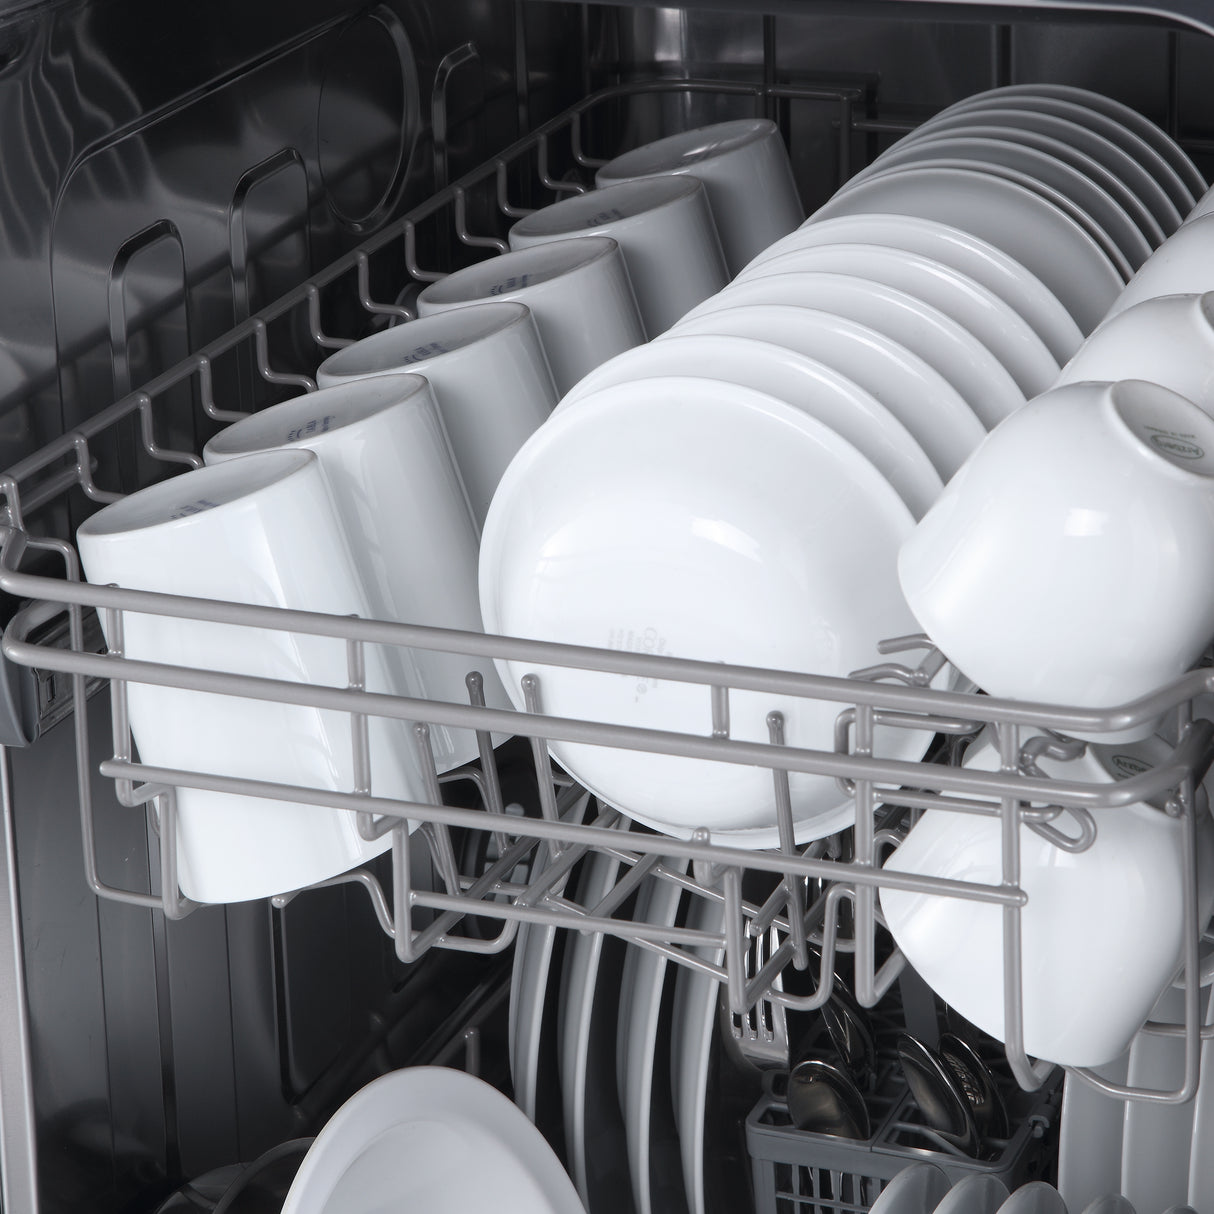 Forno 18" Built-in Dishwasher in White